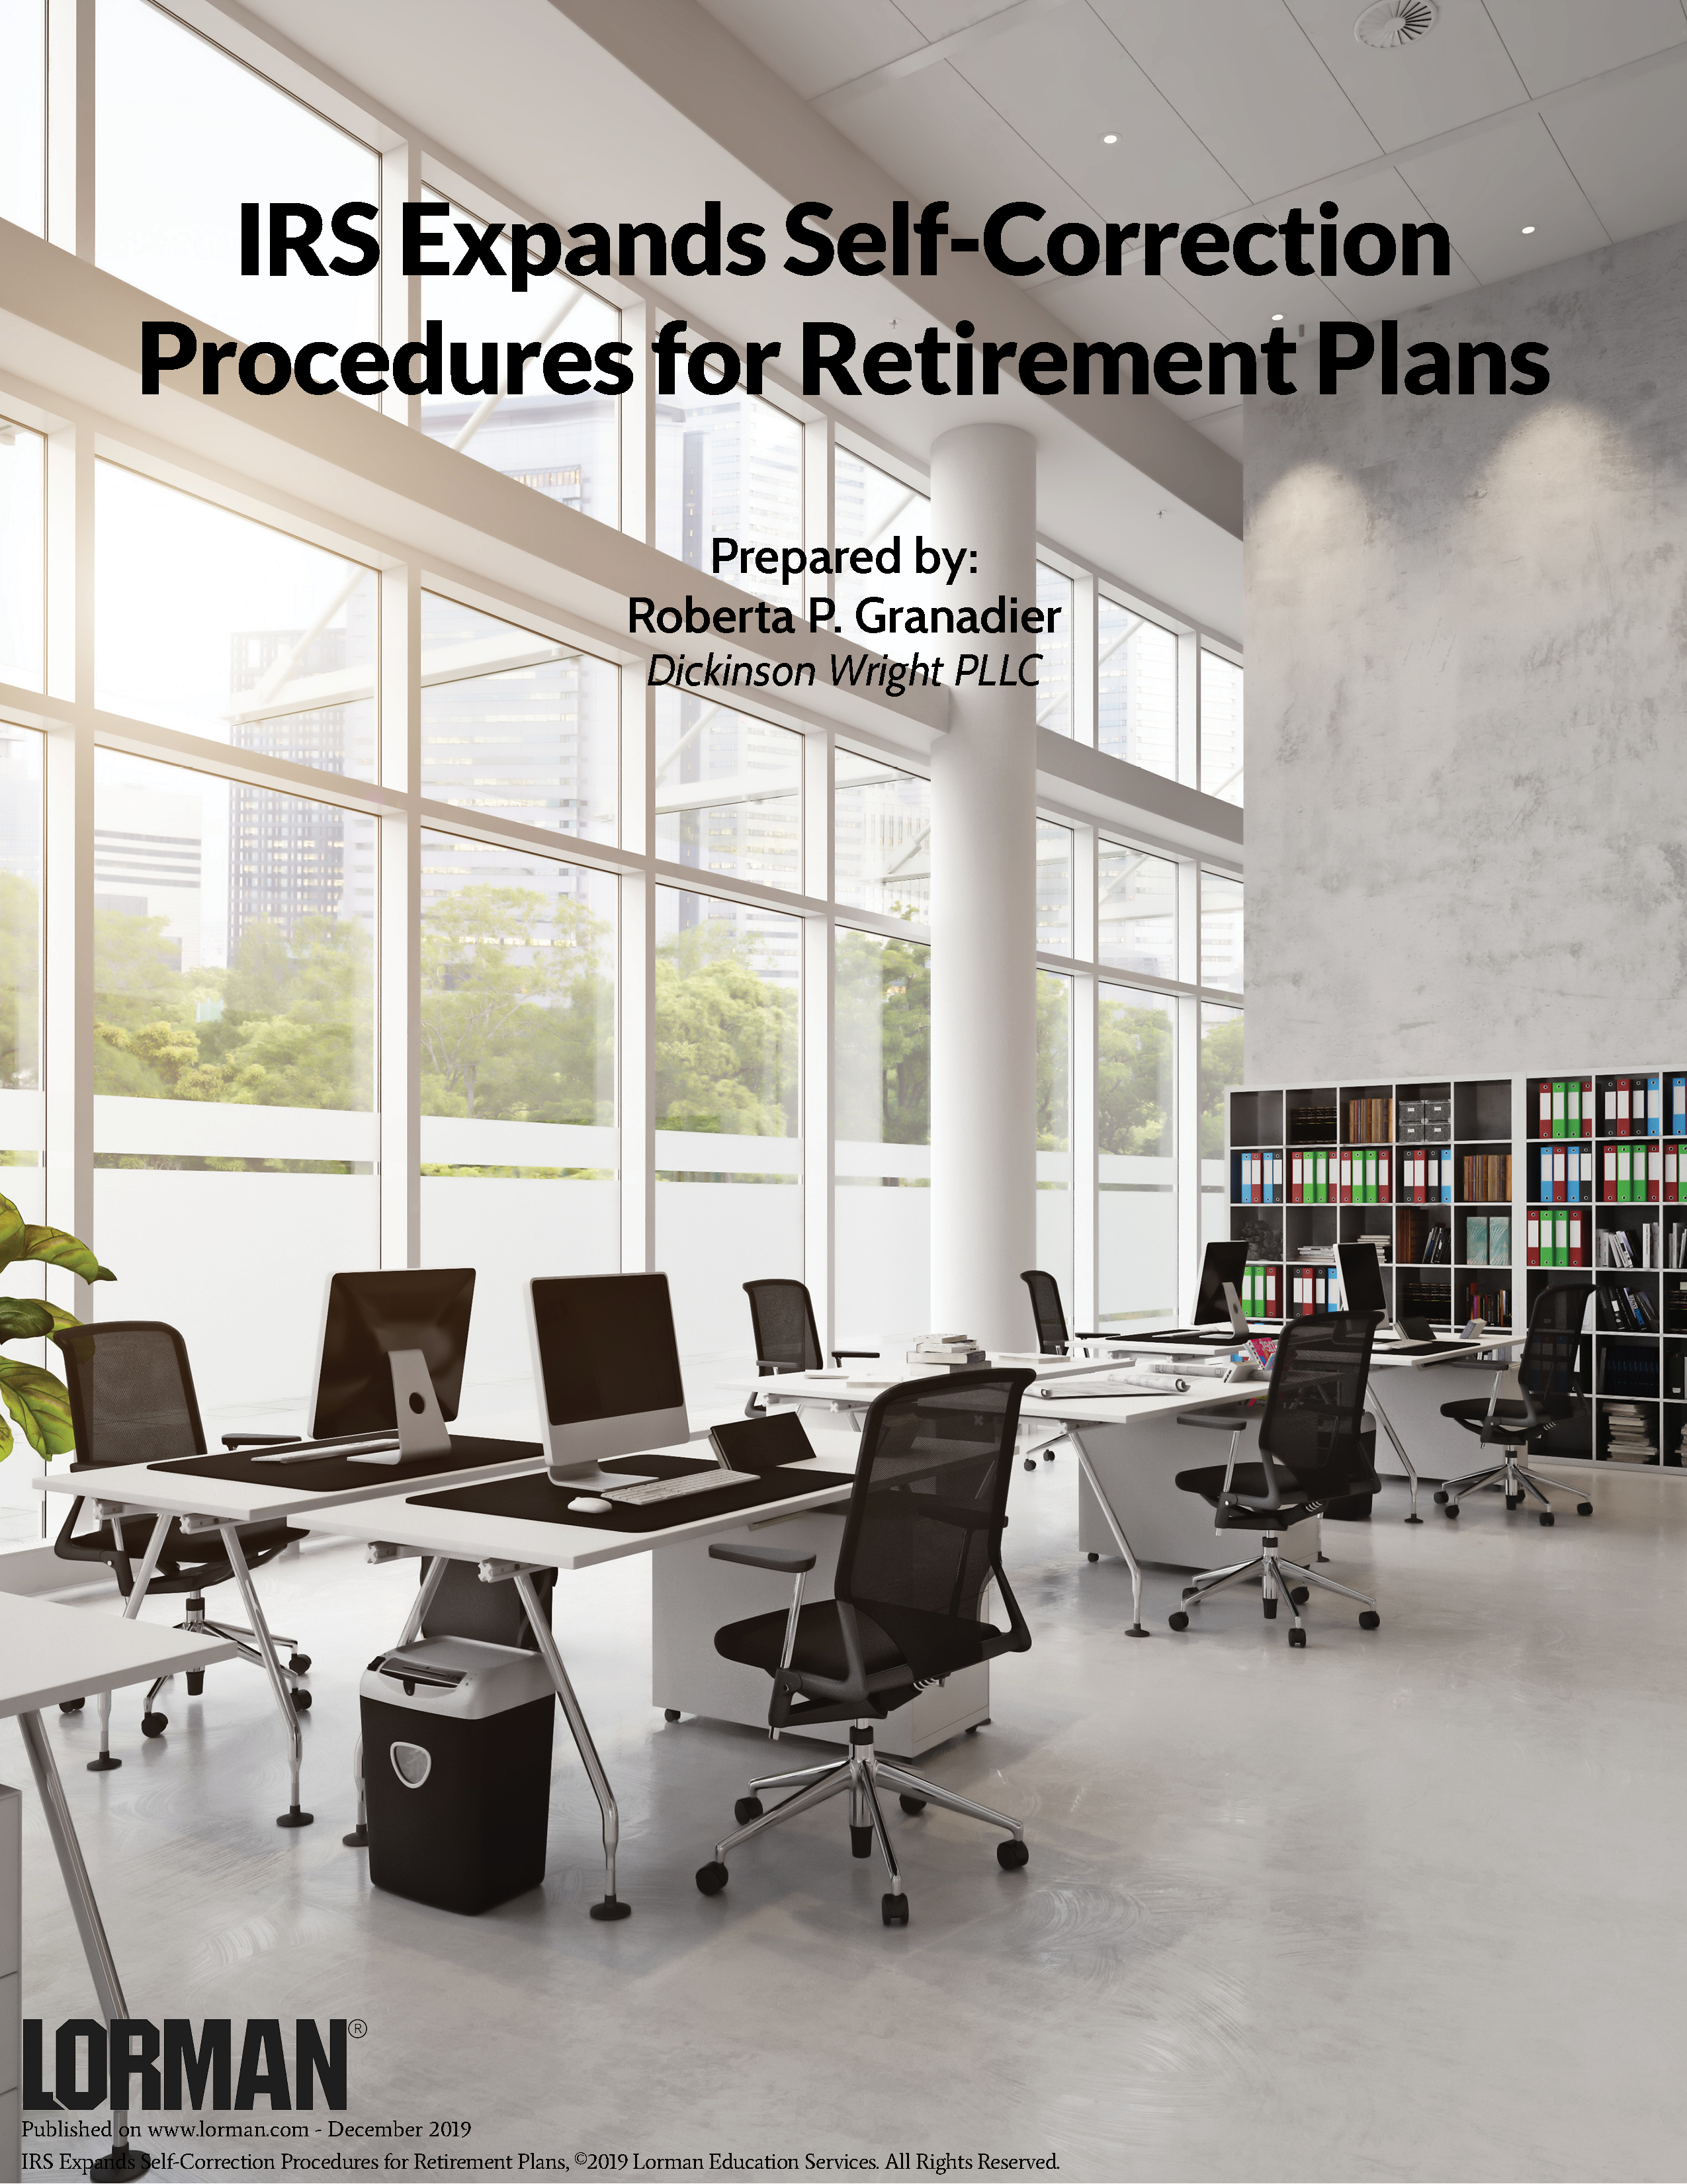 IRS Expands Self-Correction Procedures for Retirement Plans